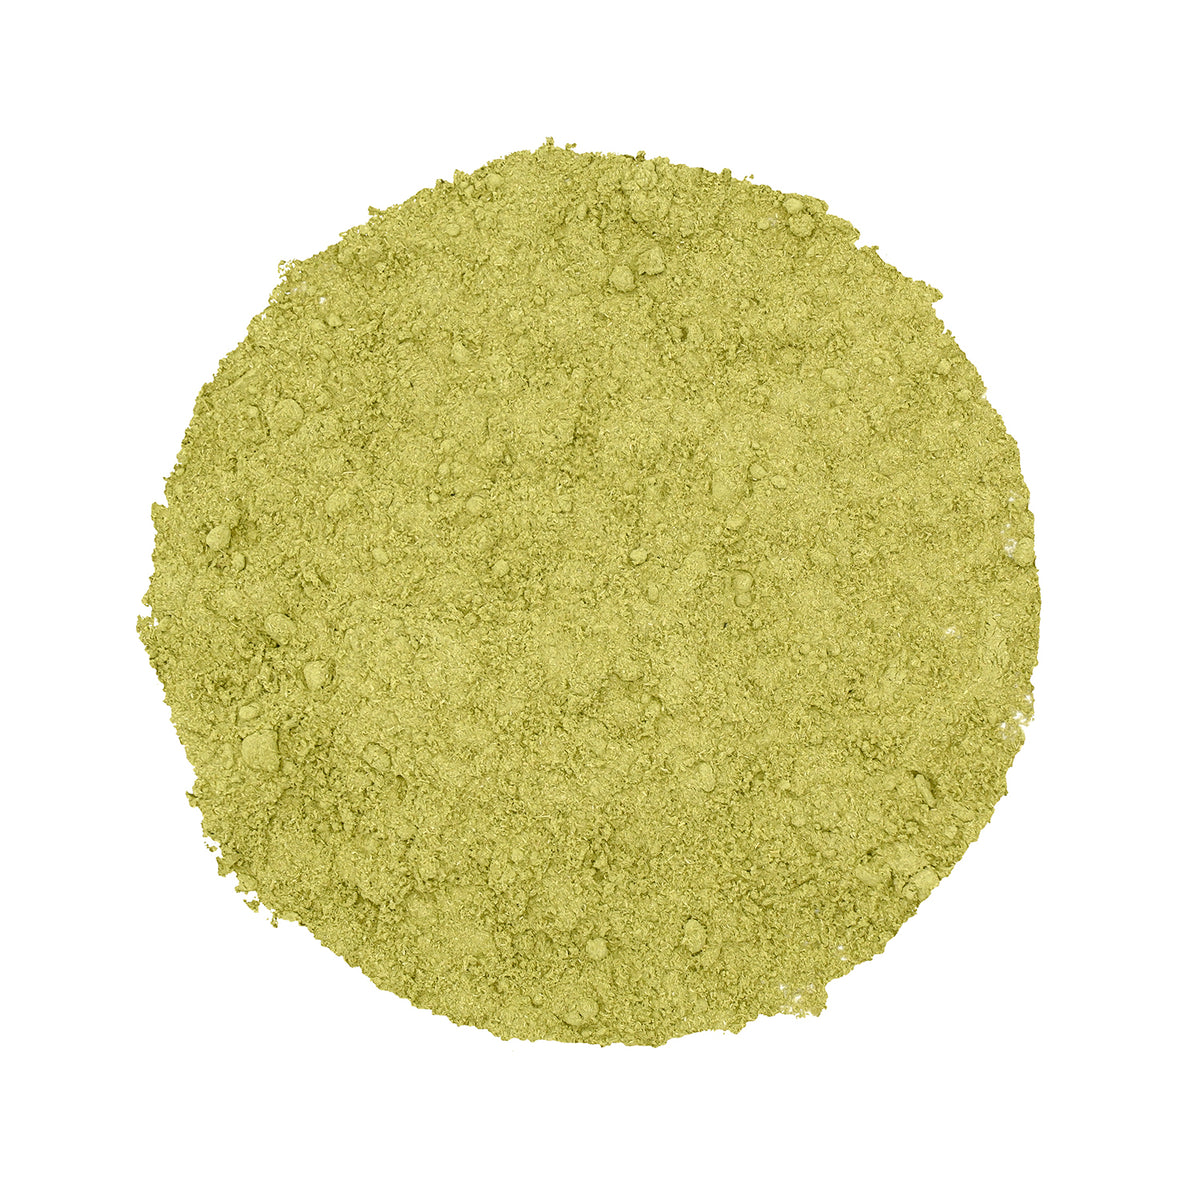 Wheat Grass Powder 100g  -  Made from Organic Wheatgrass Shoots grown using Sharbati Wheatberries | Gluten-free